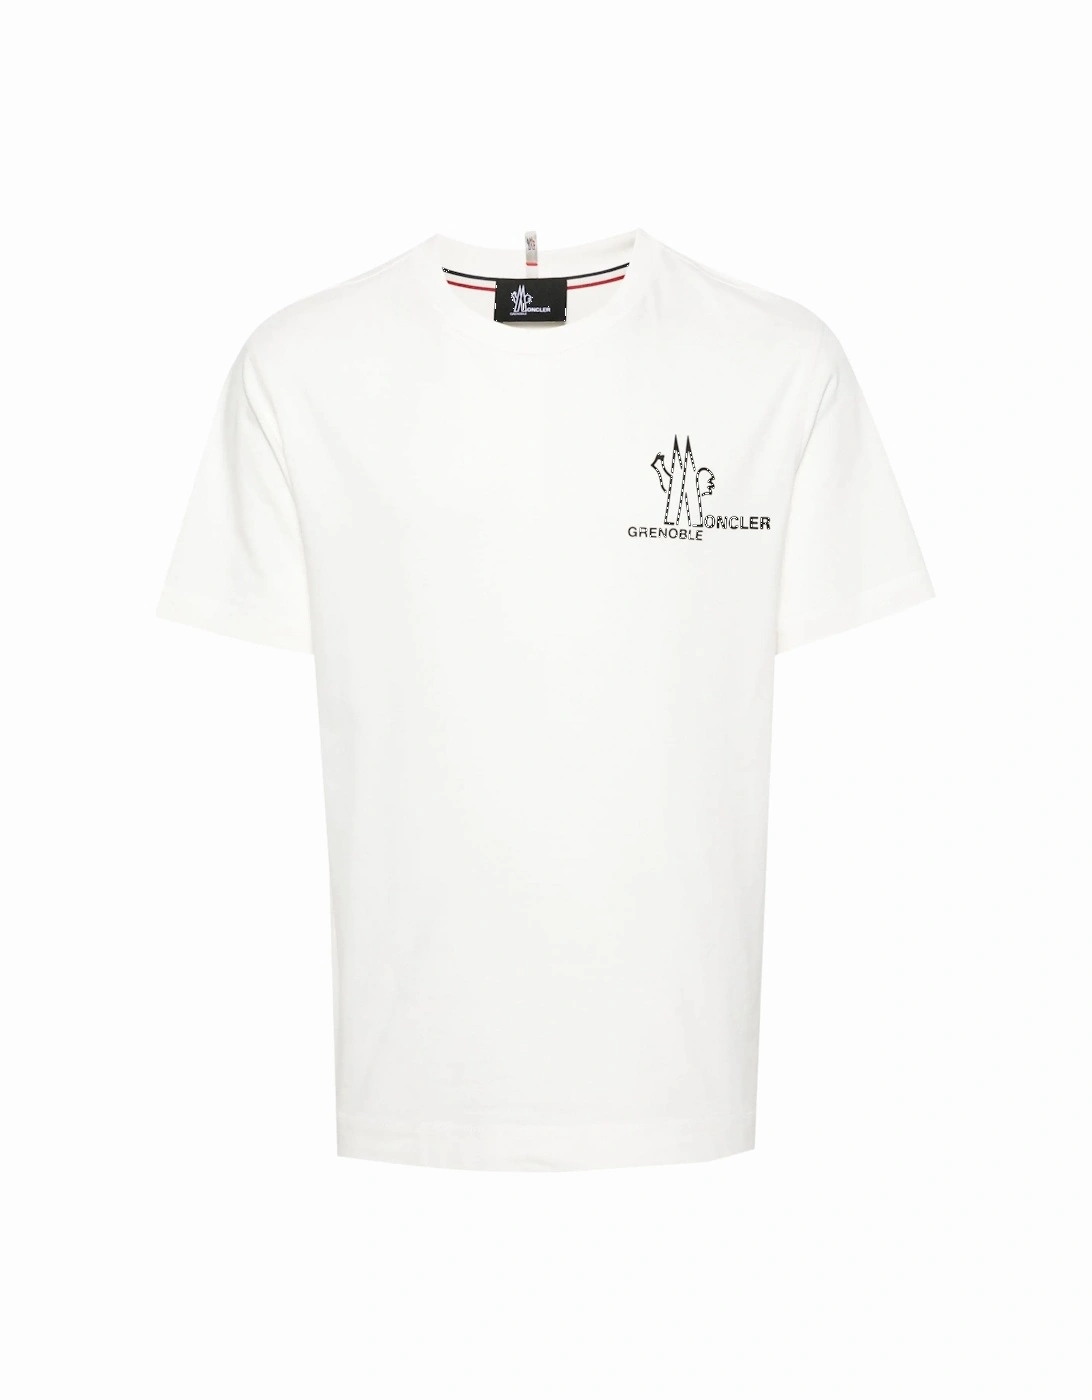 Dynamics T-shirt White, 6 of 5